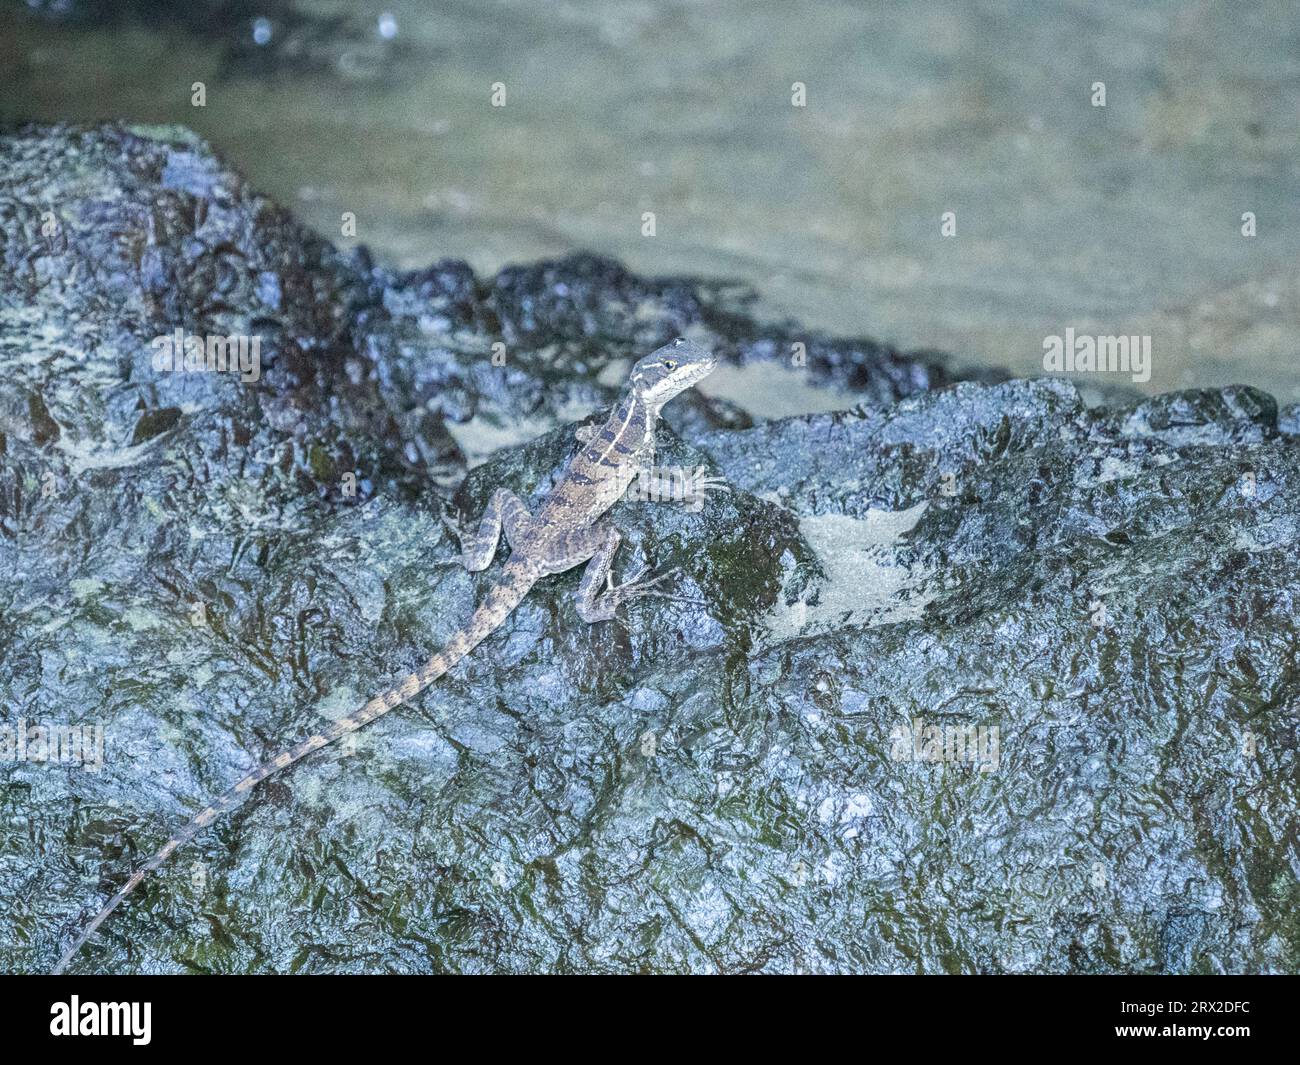 Basilisco comune femminile adulta (basiliscus basiliscus) su una roccia vicino a un torrente a Caletas, Costa Rica, America centrale Foto Stock